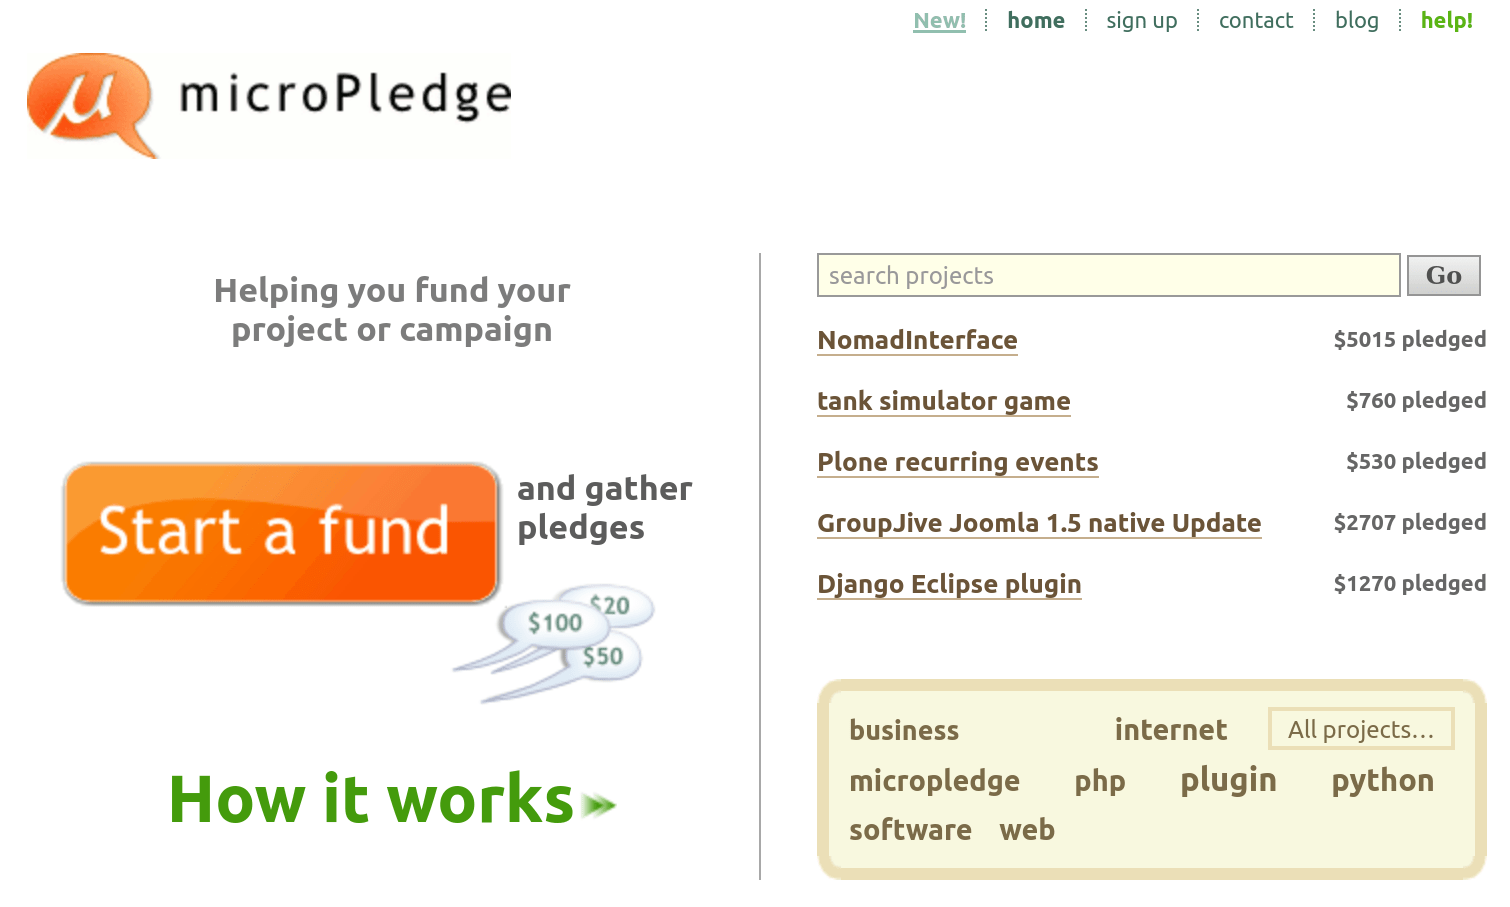 microPledge homepage